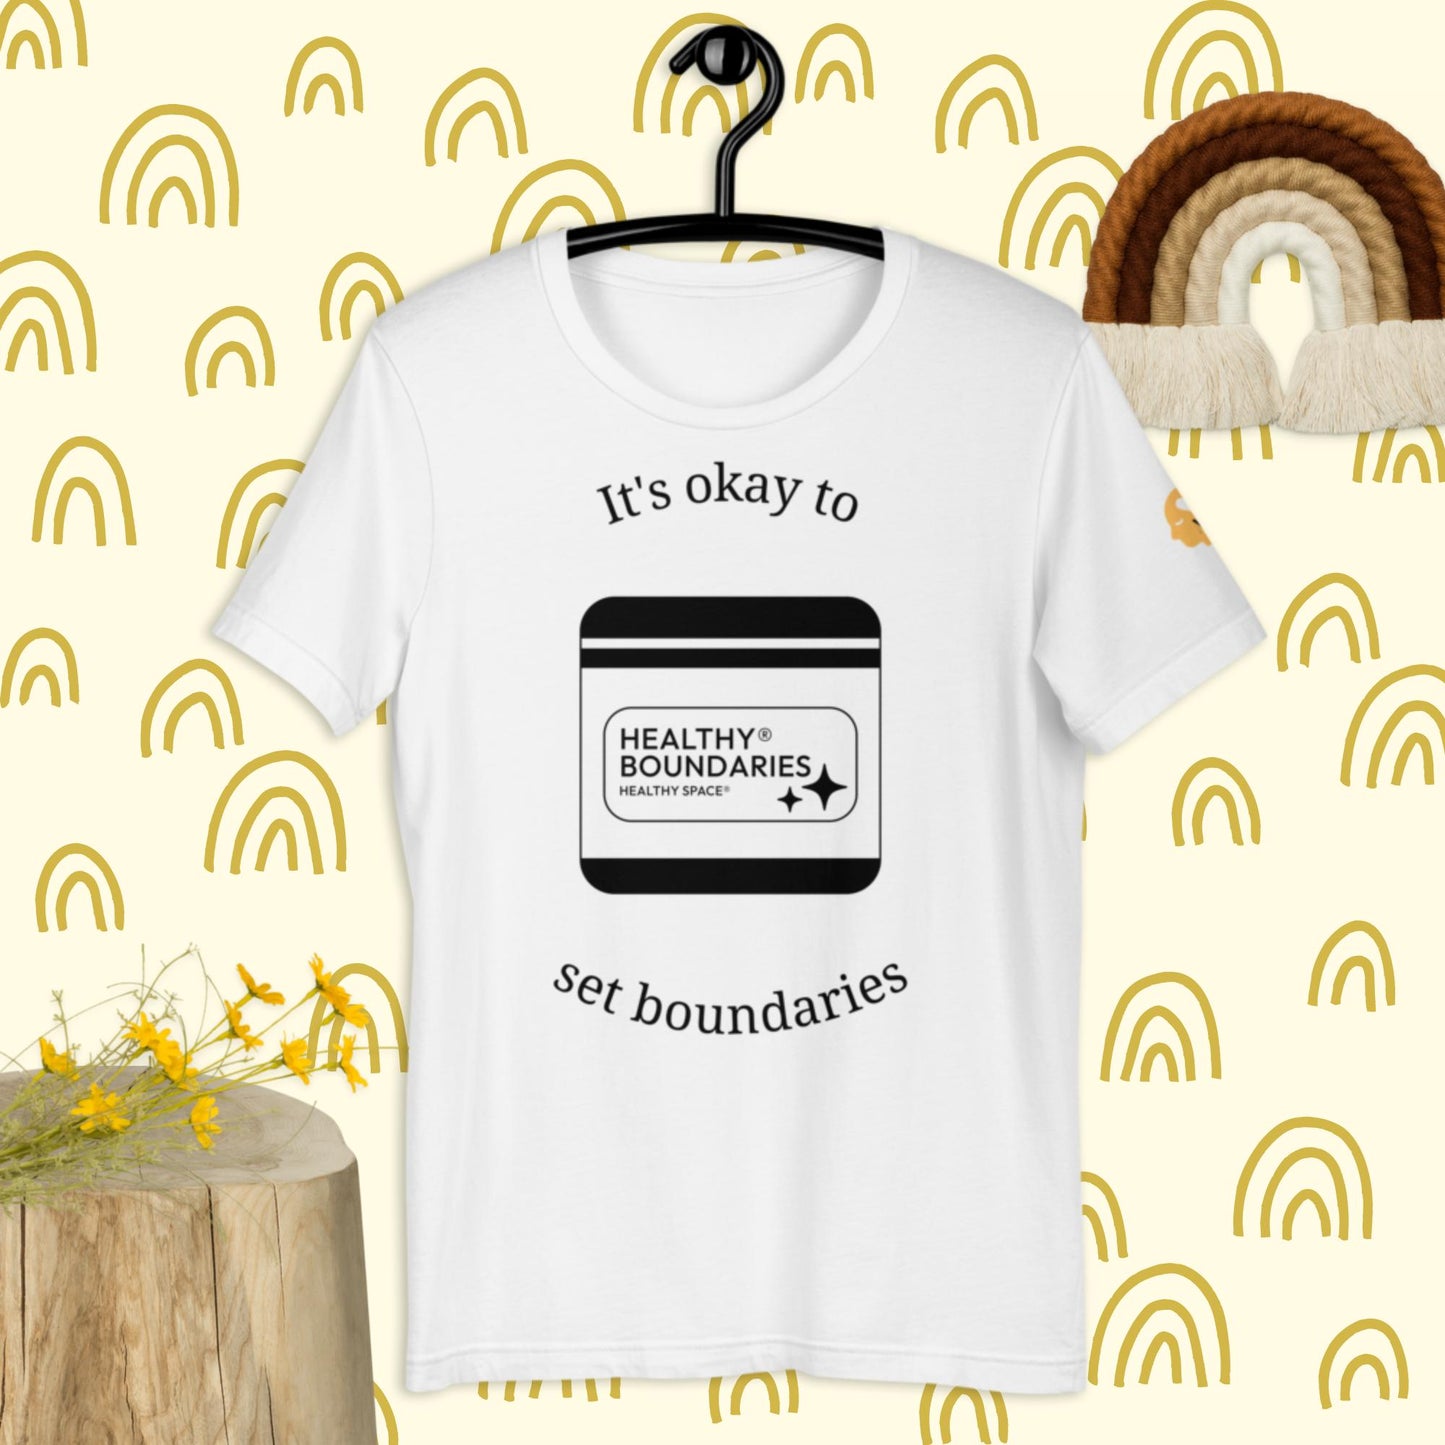 It's okay to set boundaries t-shirt